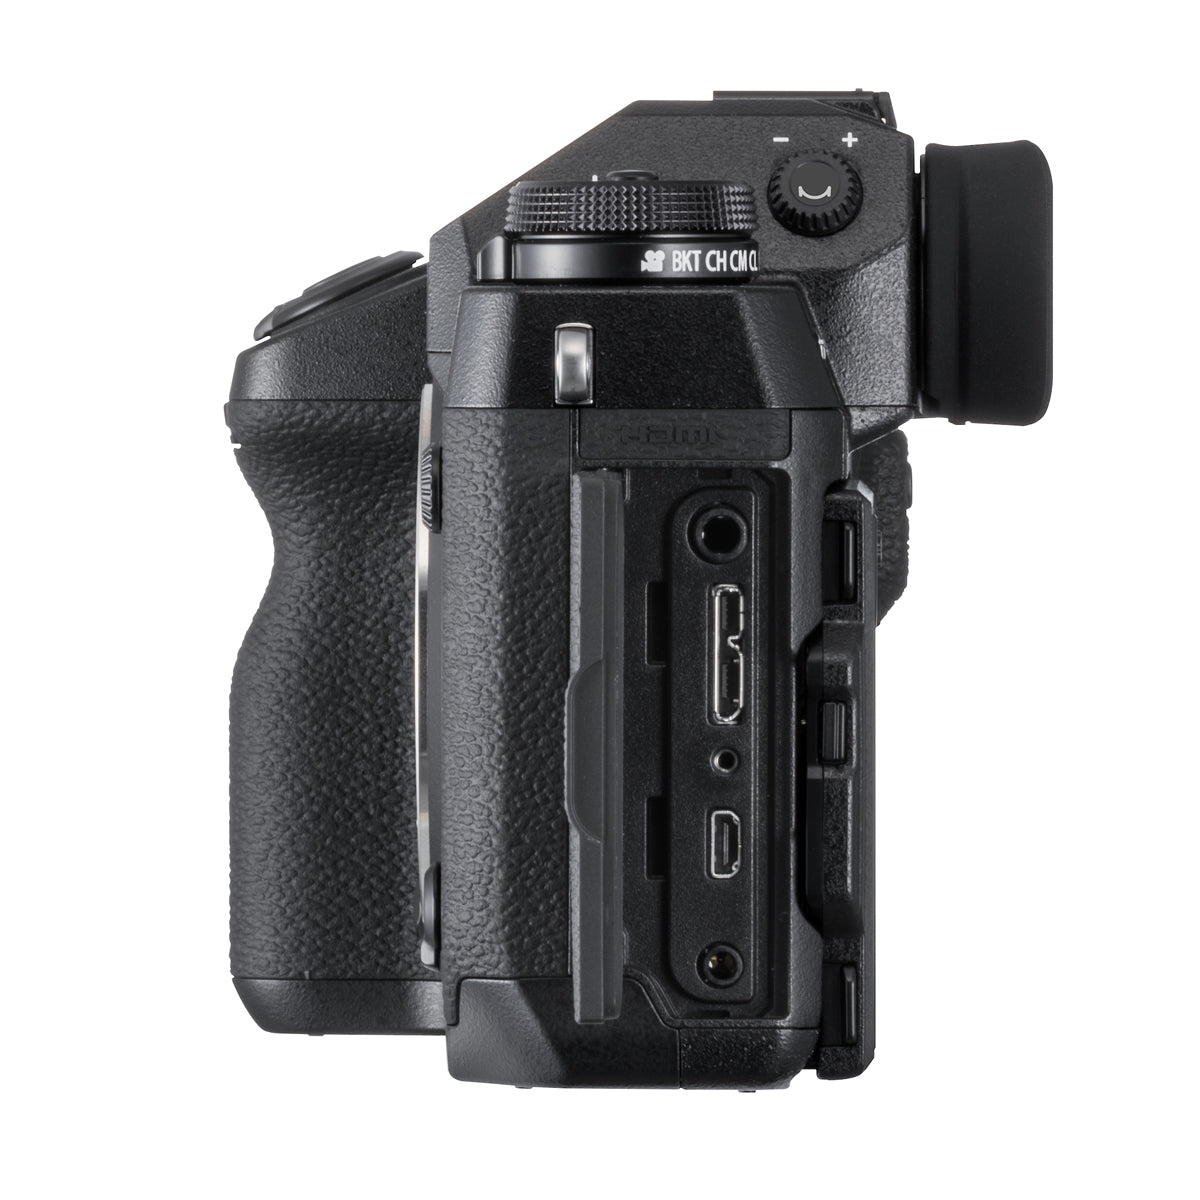 Fujifilm X-H1 Digital Camera with VPB-XH1 Power Booster Grip Kit